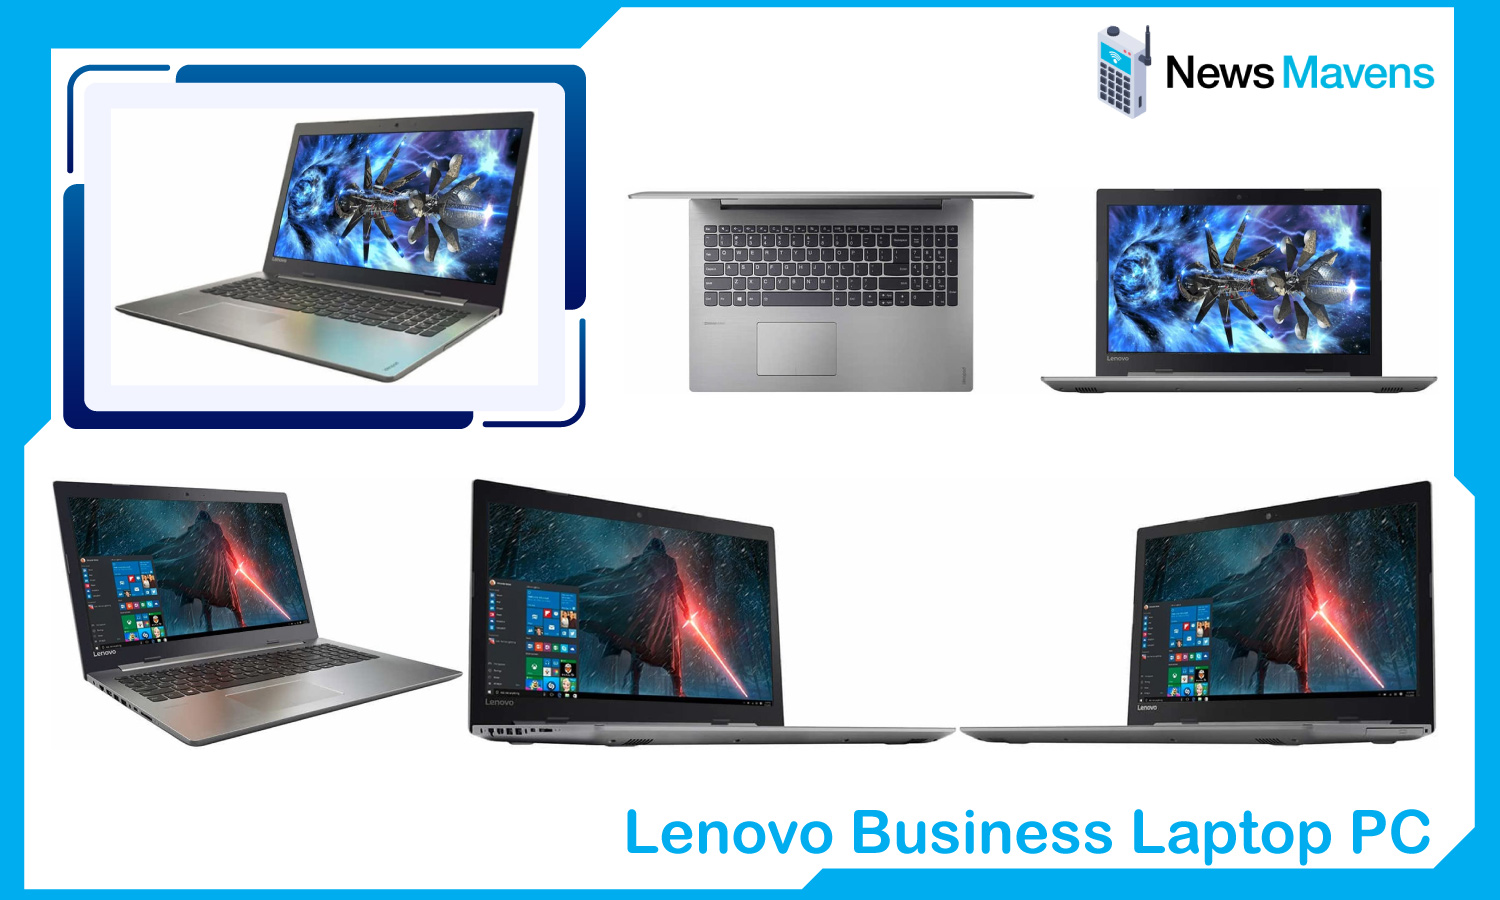 2018 Lenovo Business Laptop PC